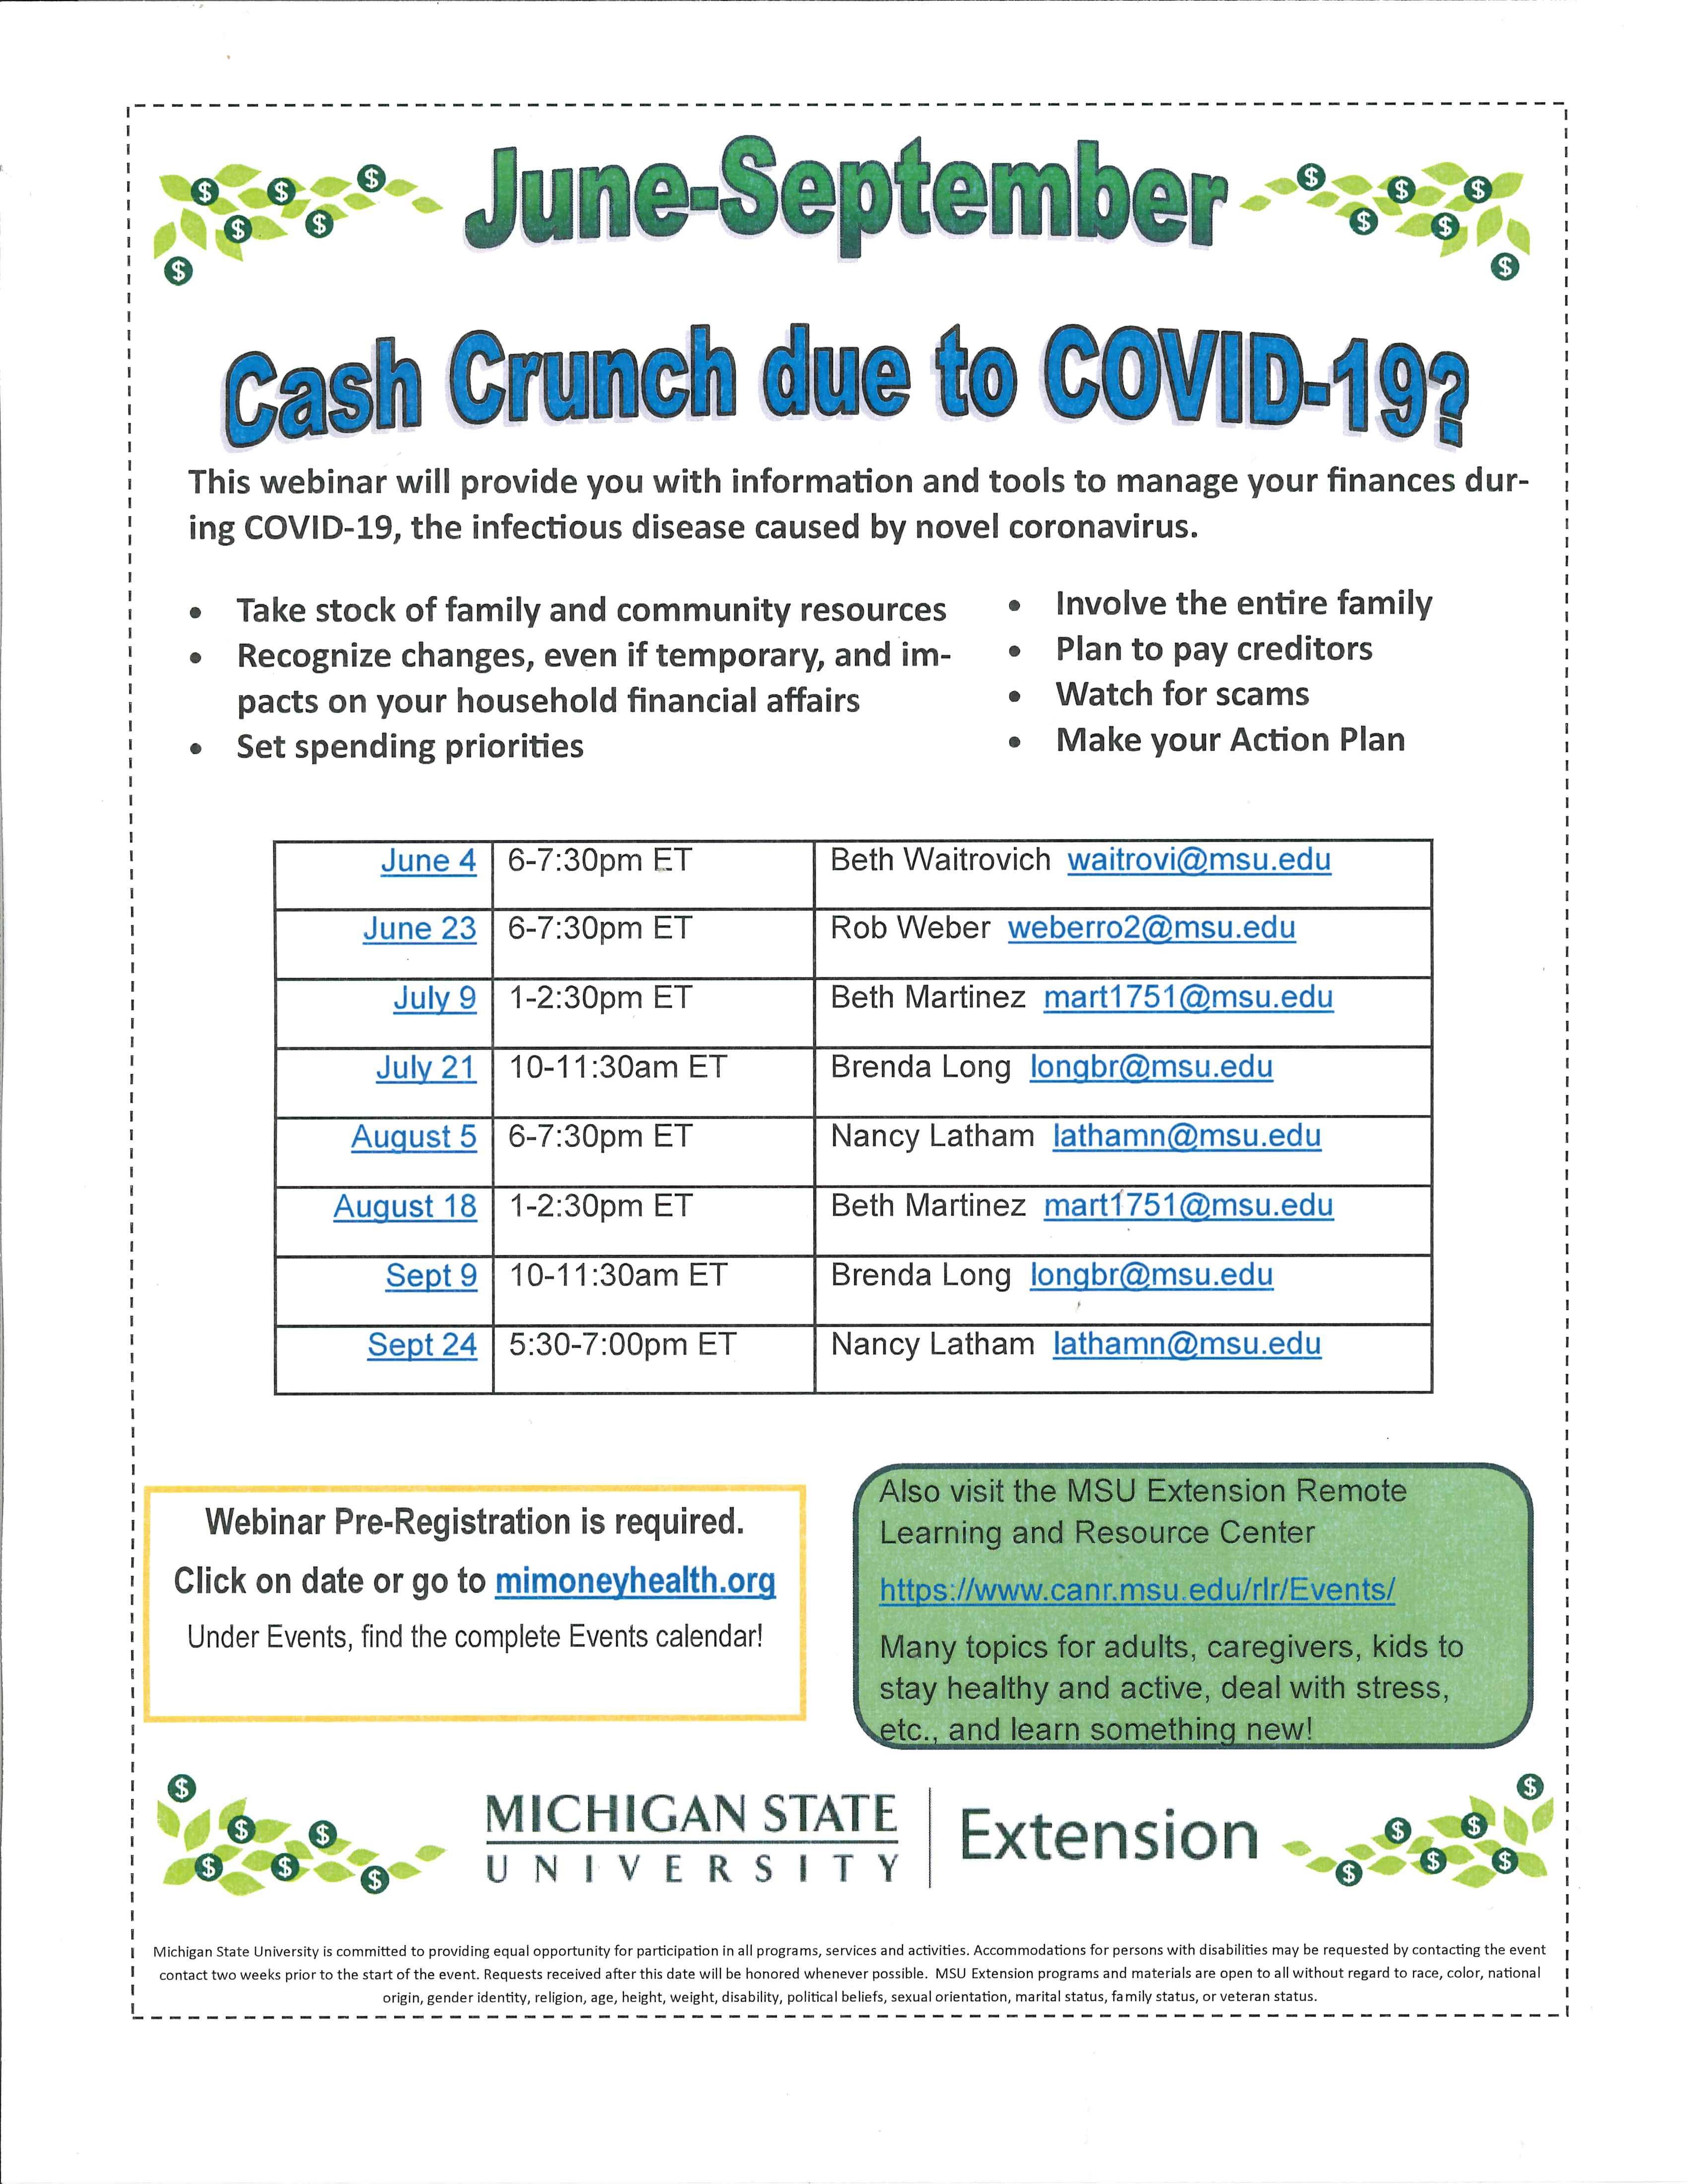 Covid Cash Crunch